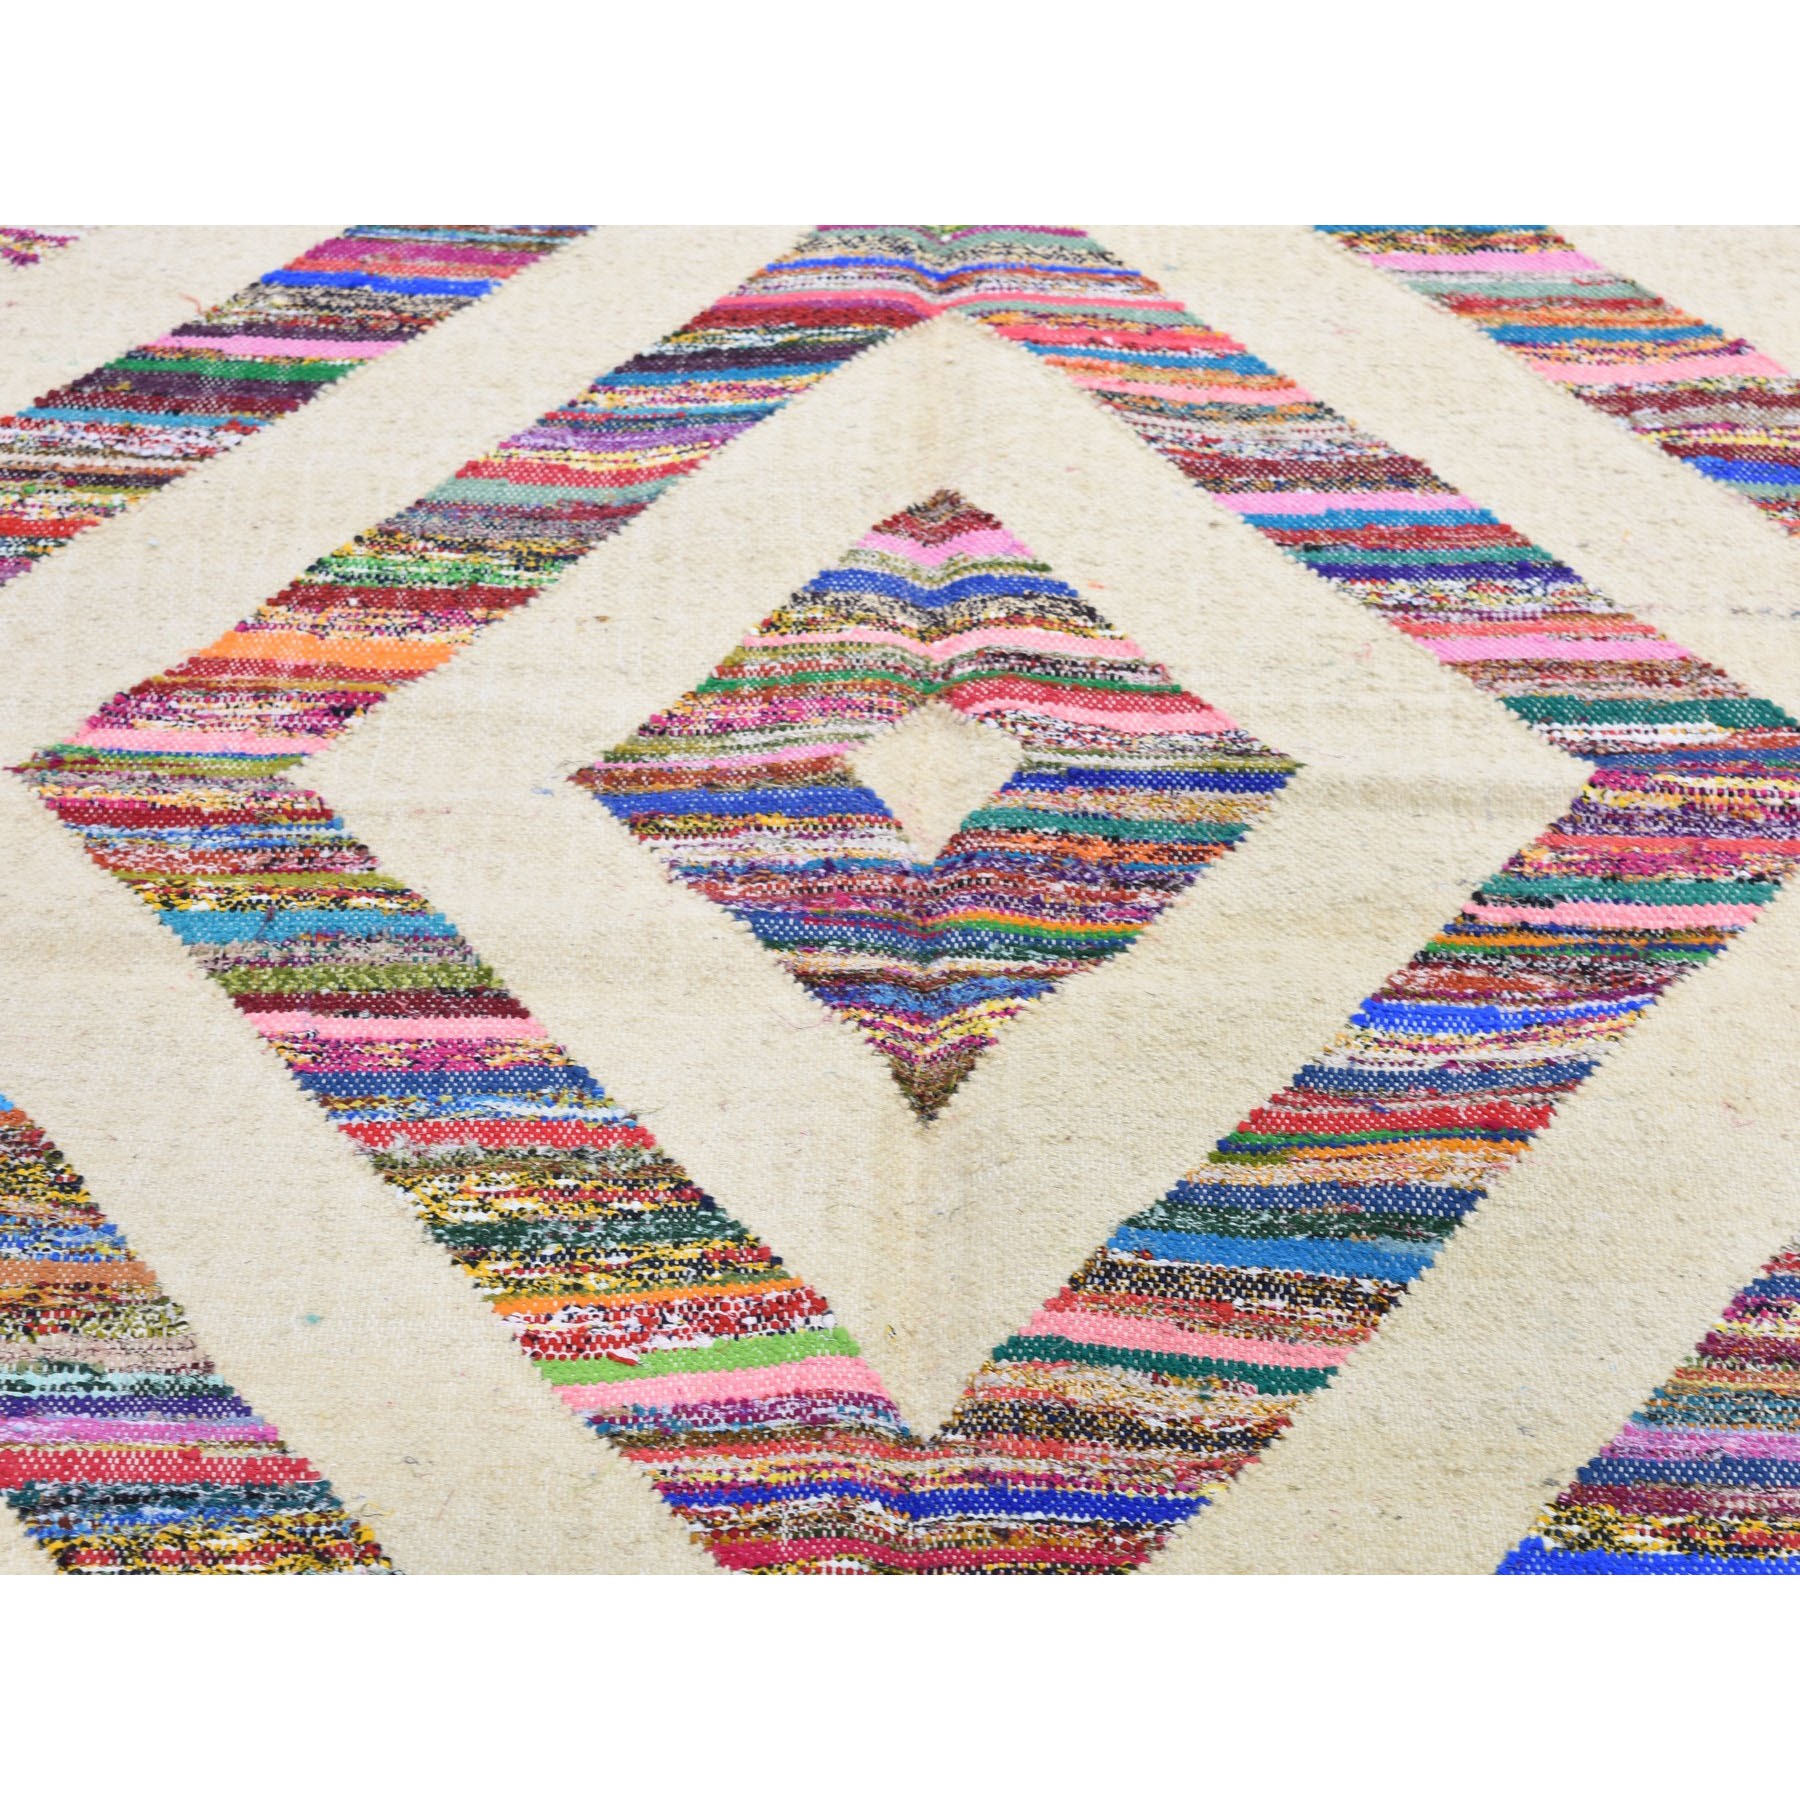 9-10 x14- Cotton and Sari Silk Geometric Durie Kilim Hand Woven Oriental Rug 